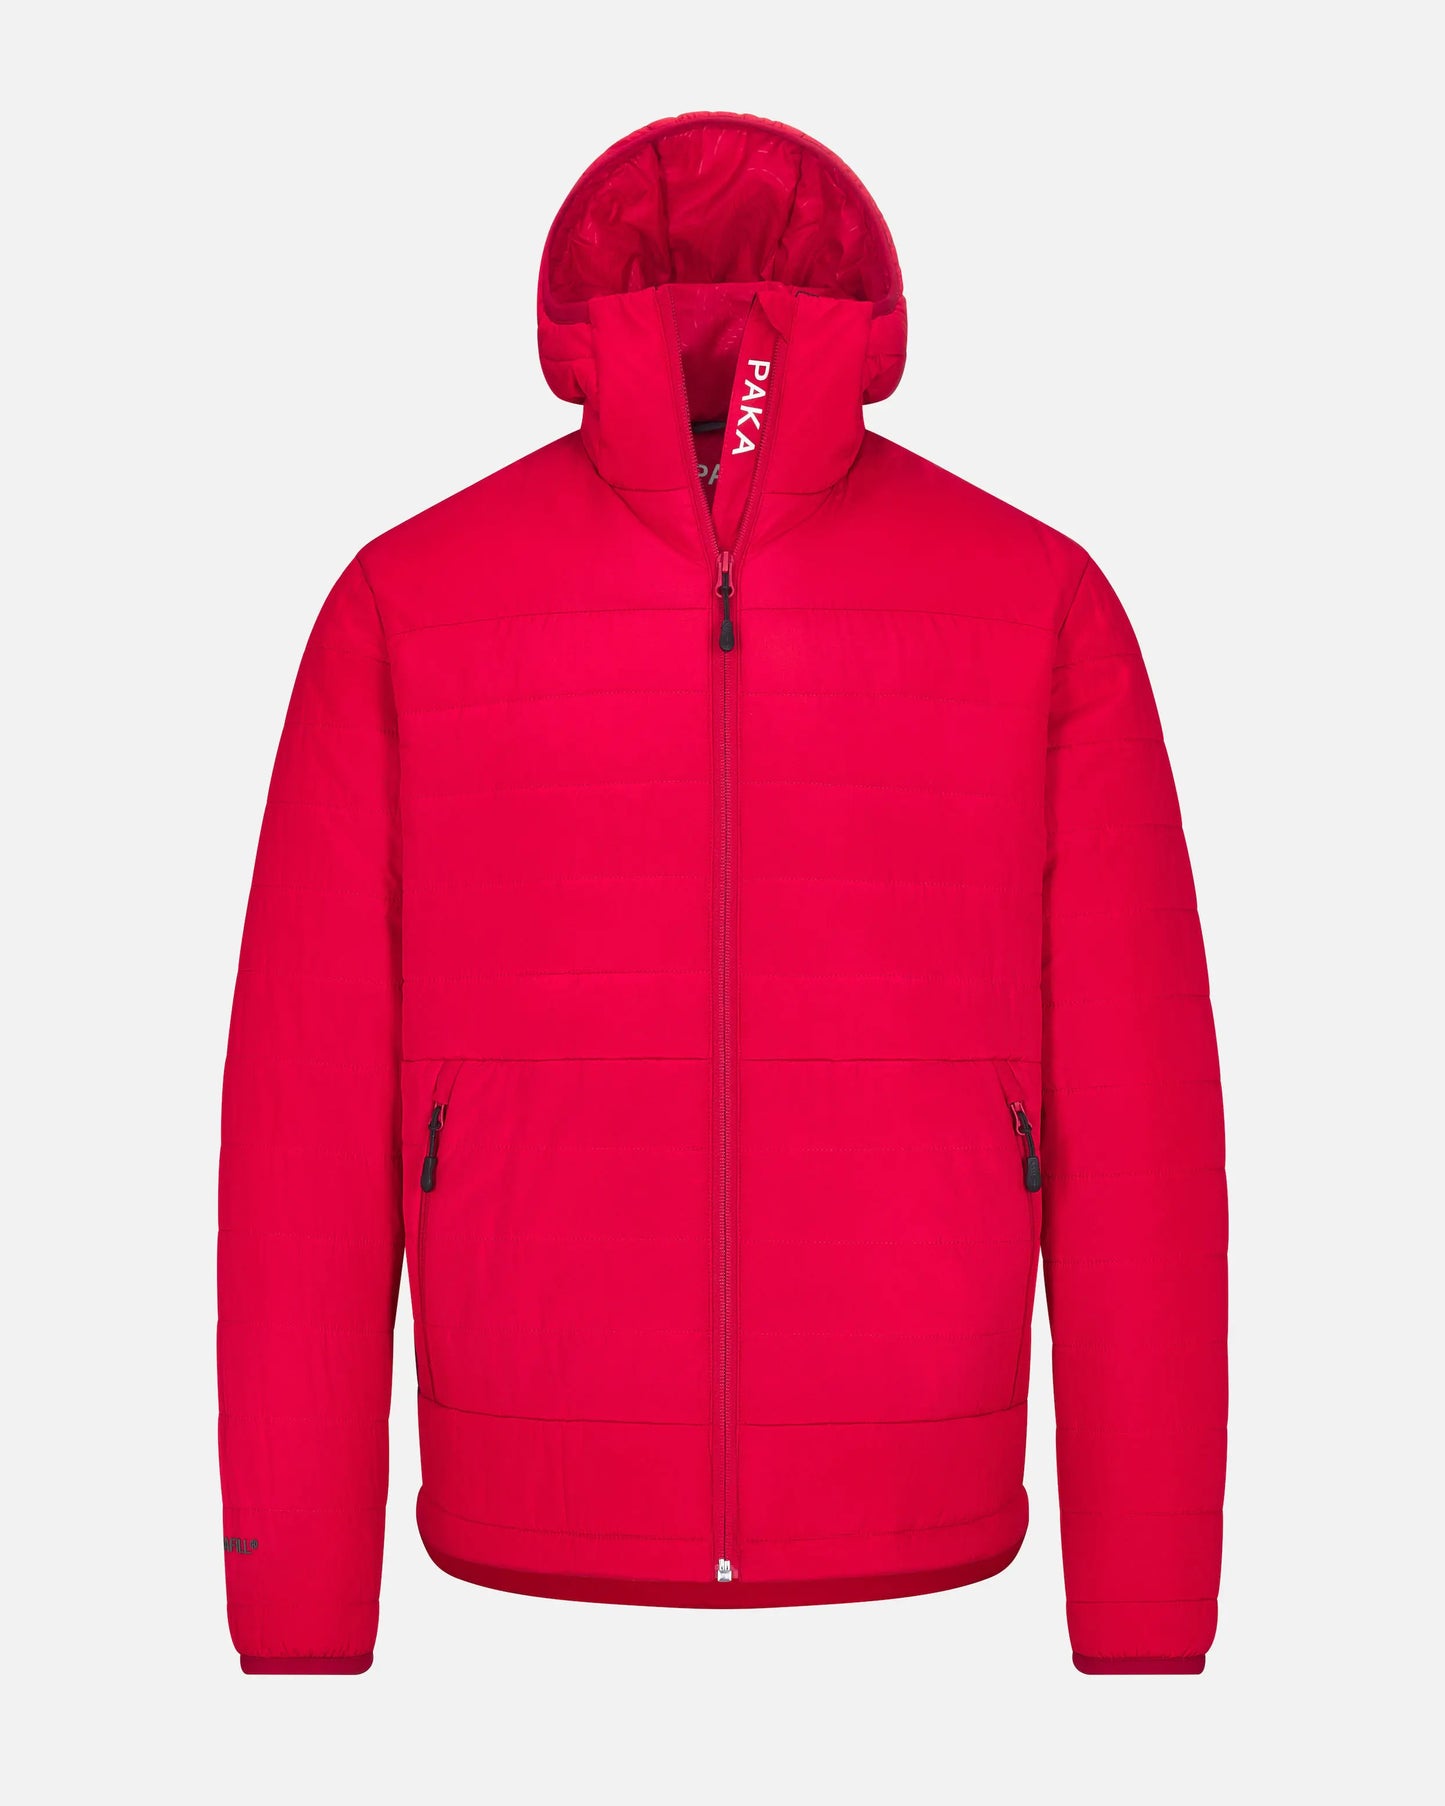 Red mens jacket 